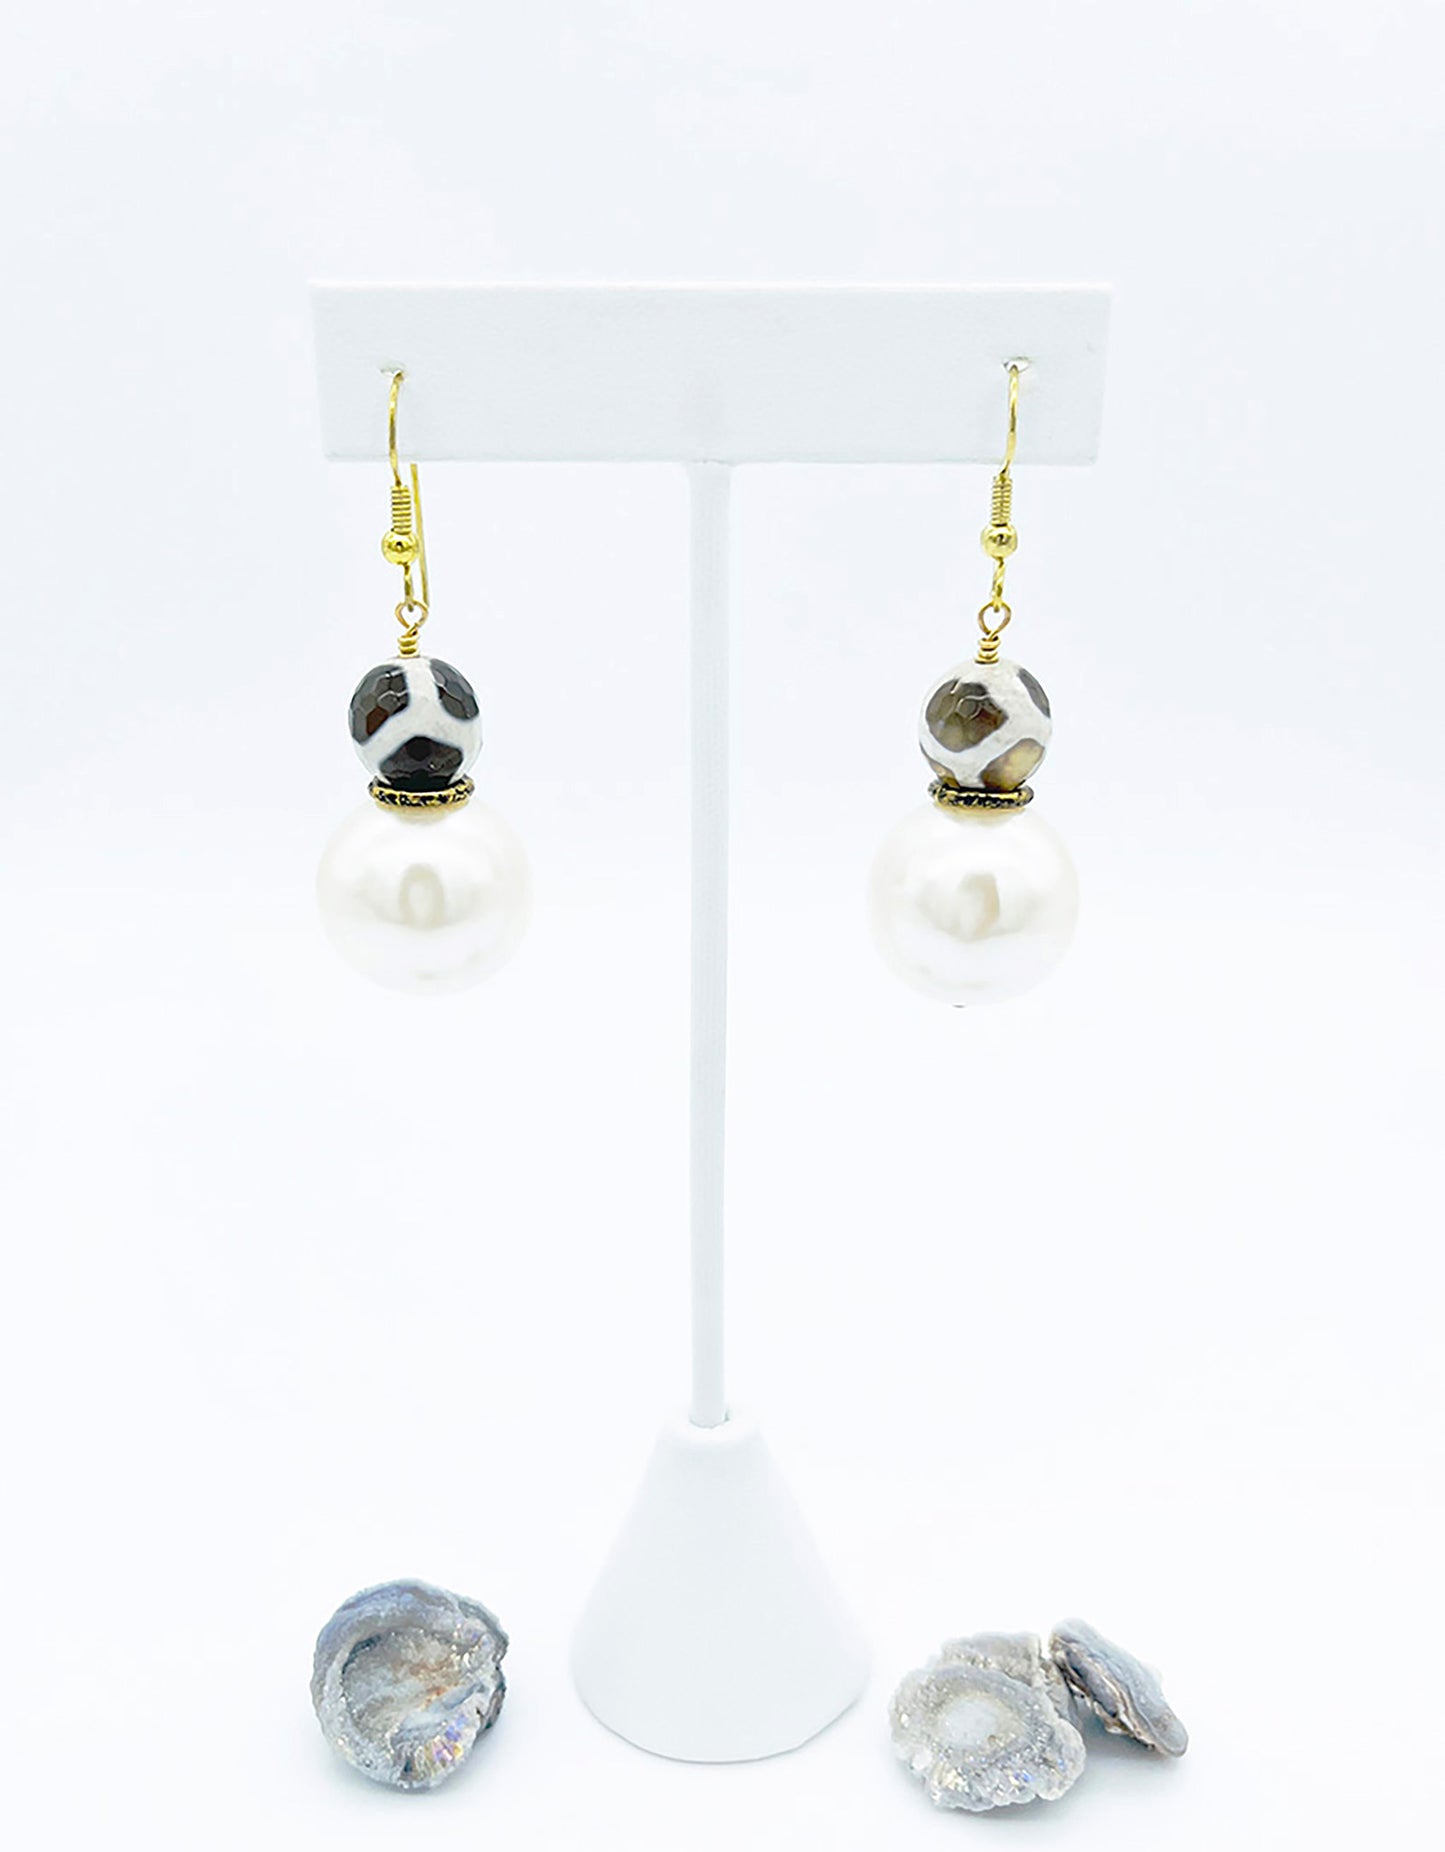 Dzi and pearl drop earrings